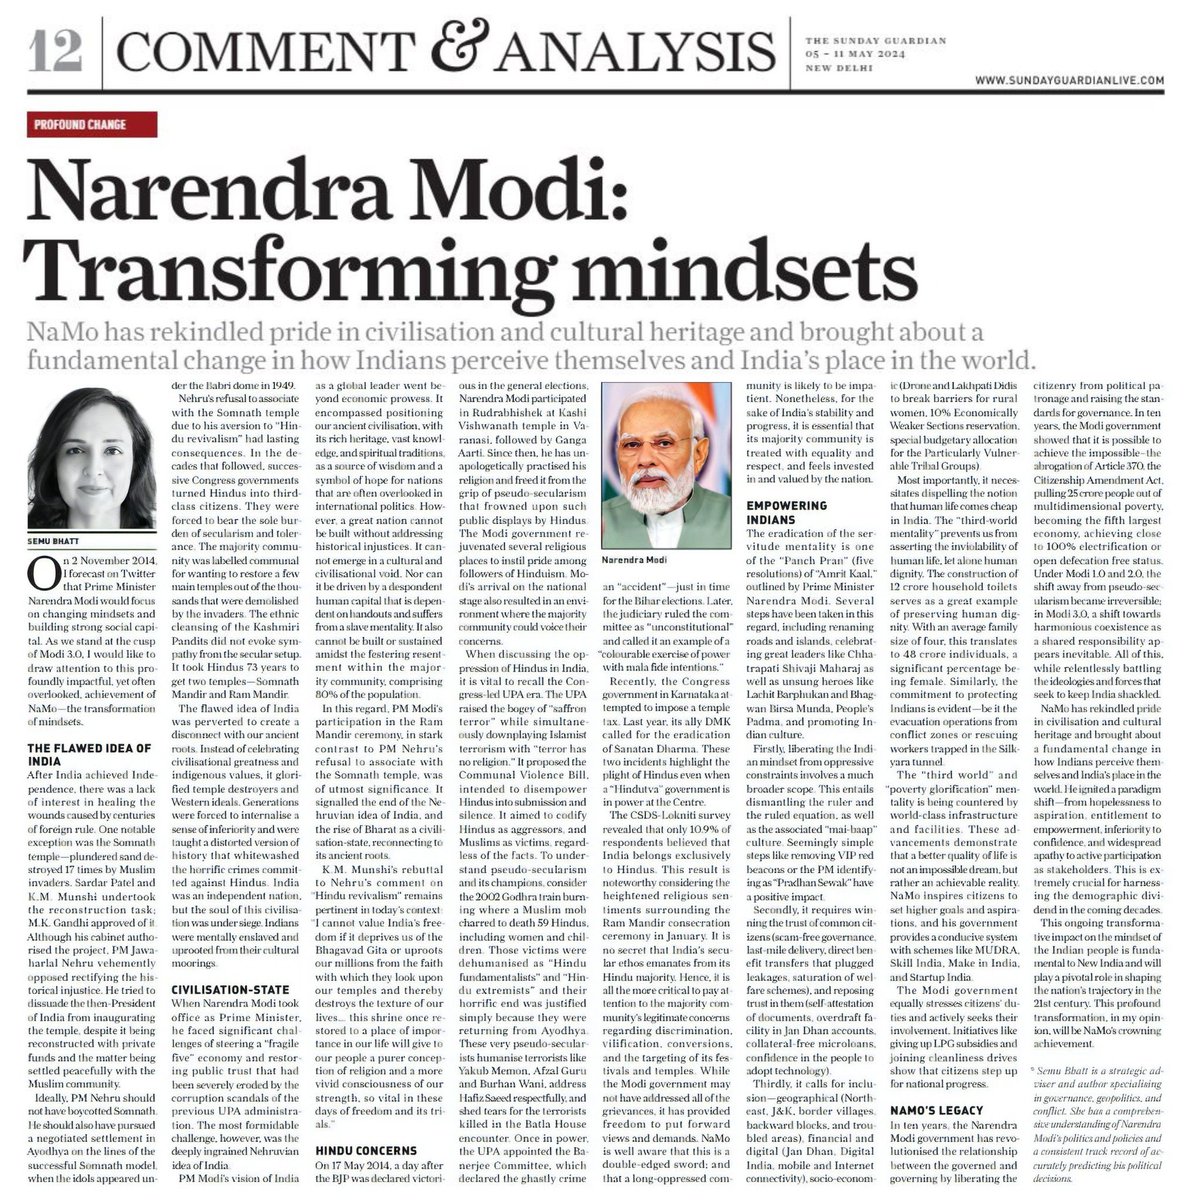 Narendra Modi: Transforming mindsets! A brilliant article on how Hon'ble PM Shri @narendramodi ji has rekindled pride in civilisation and cultural heritage. @semubhatt